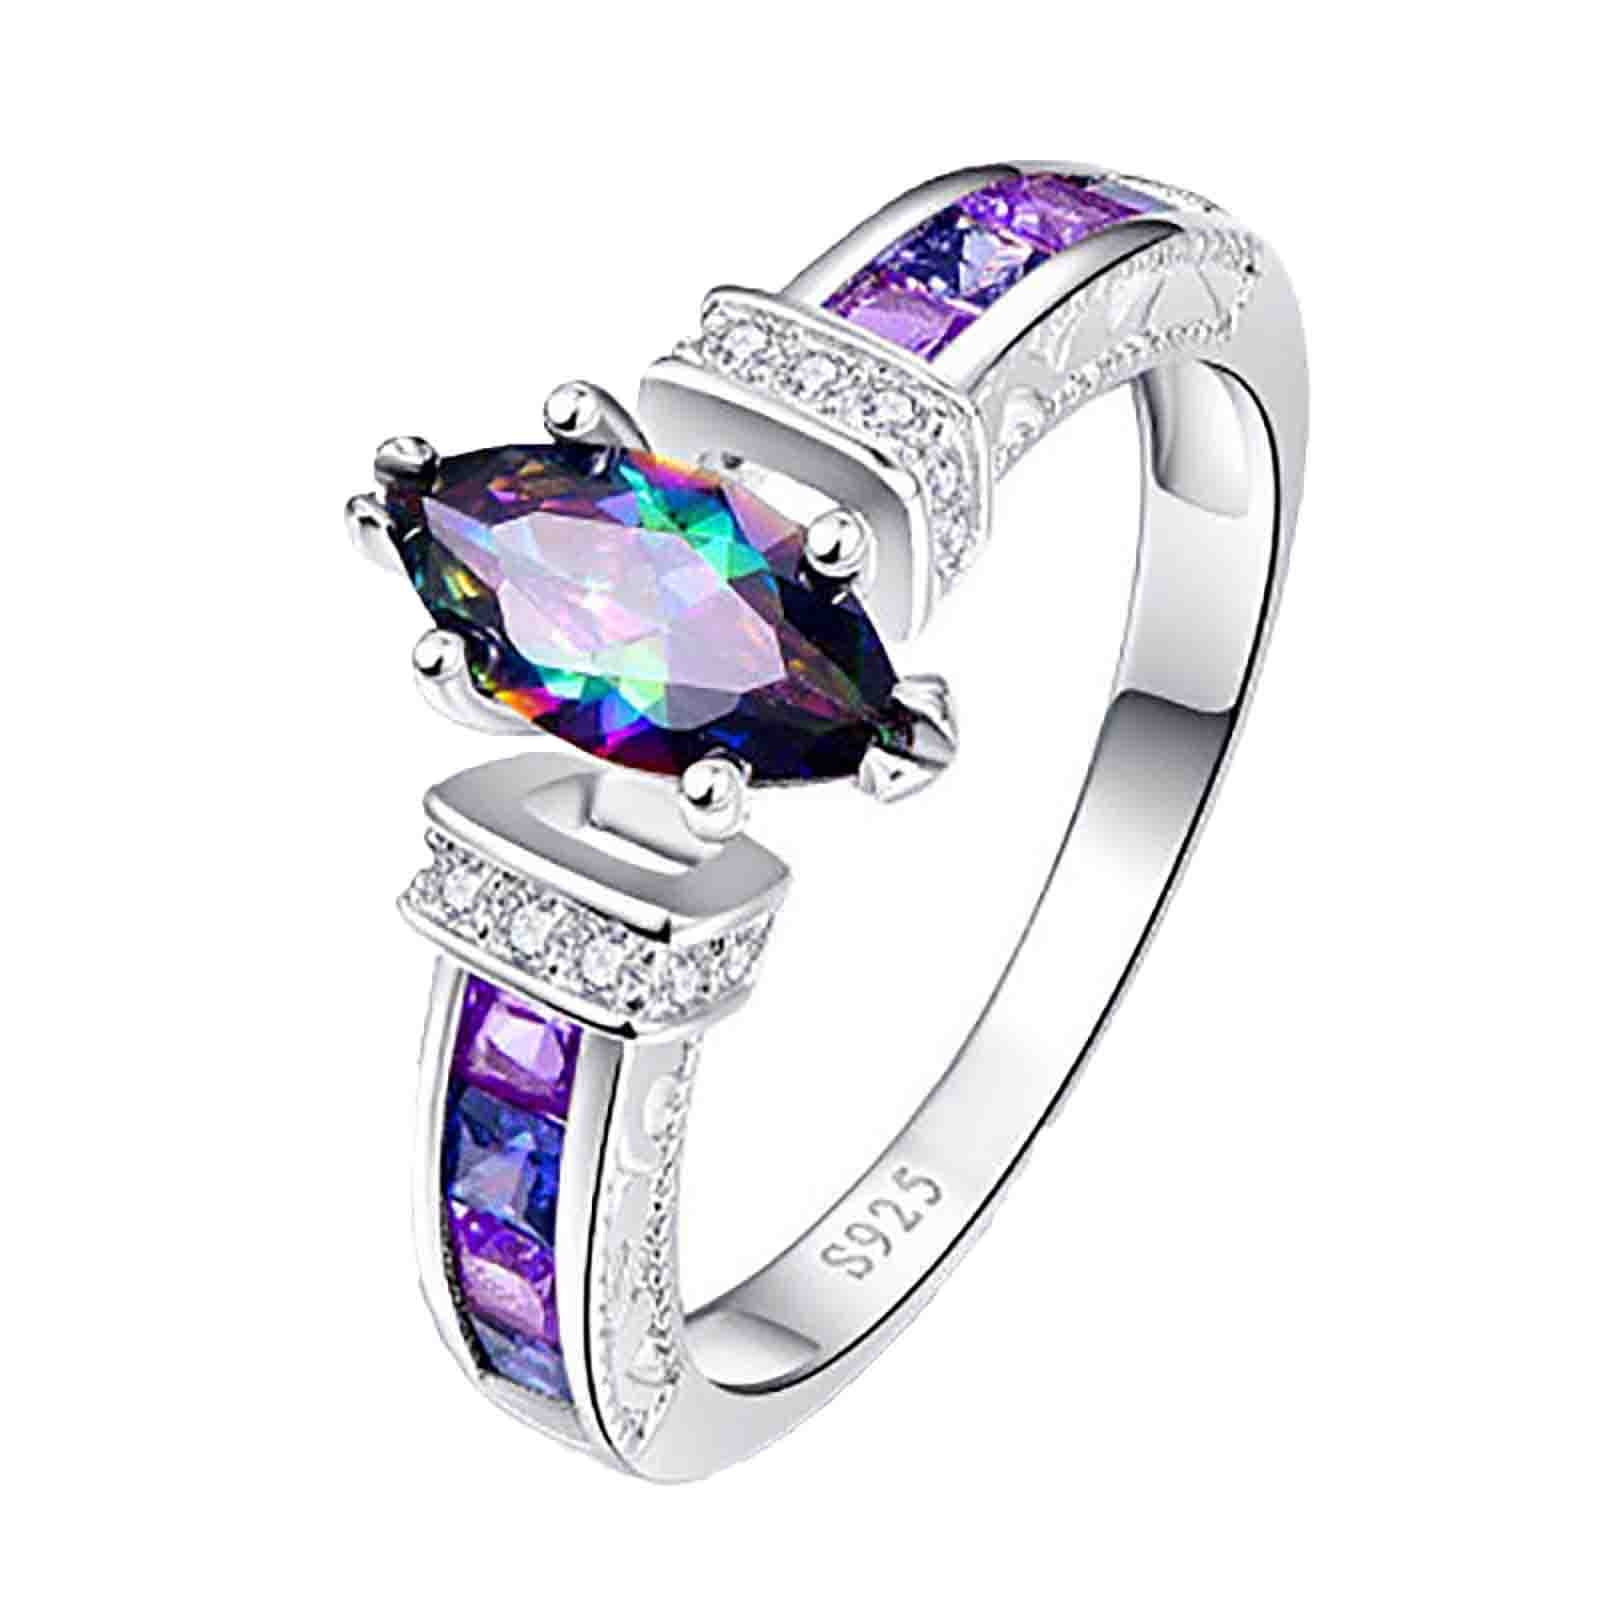 925 Silver Jewelry Square Shape Blue Sapphire Women Wedding Ring Size 6-10 